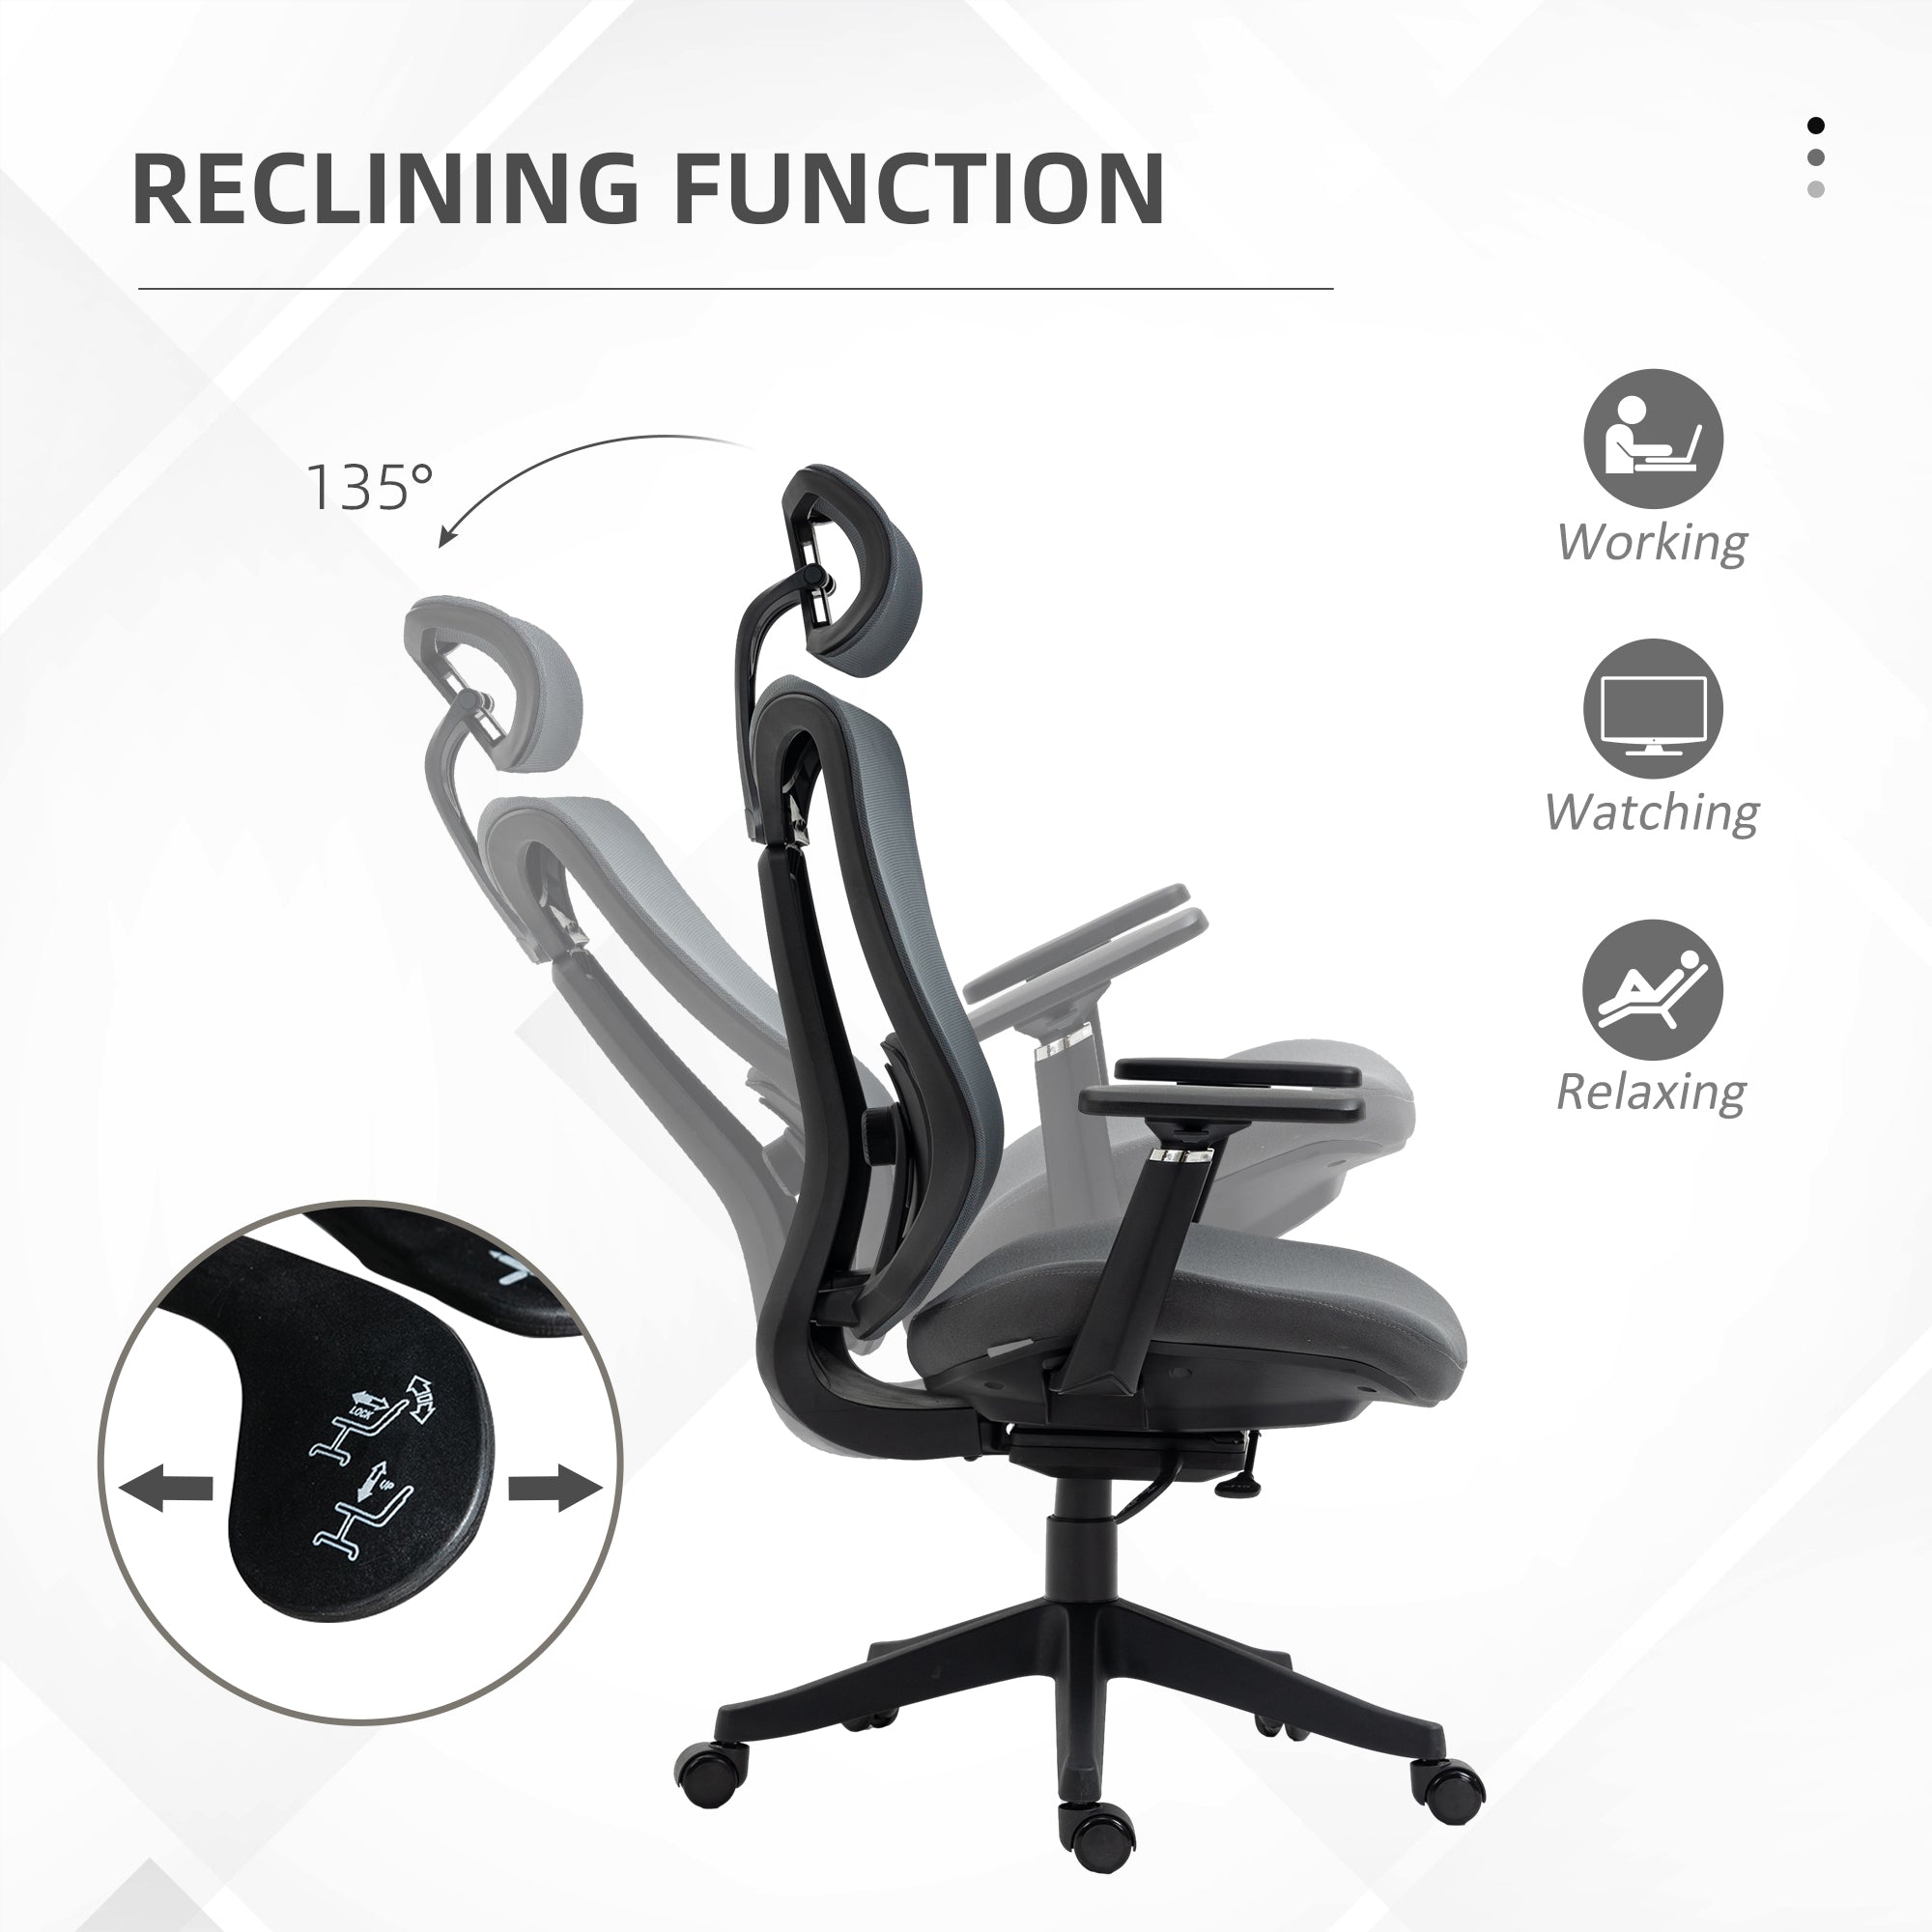 Mesh Office Chair, Reclining Desk Chair with Adjustable Headrest, Lumbar Support, 3D Armrest, Sliding Seat, Swivel Wheels, Grey-4